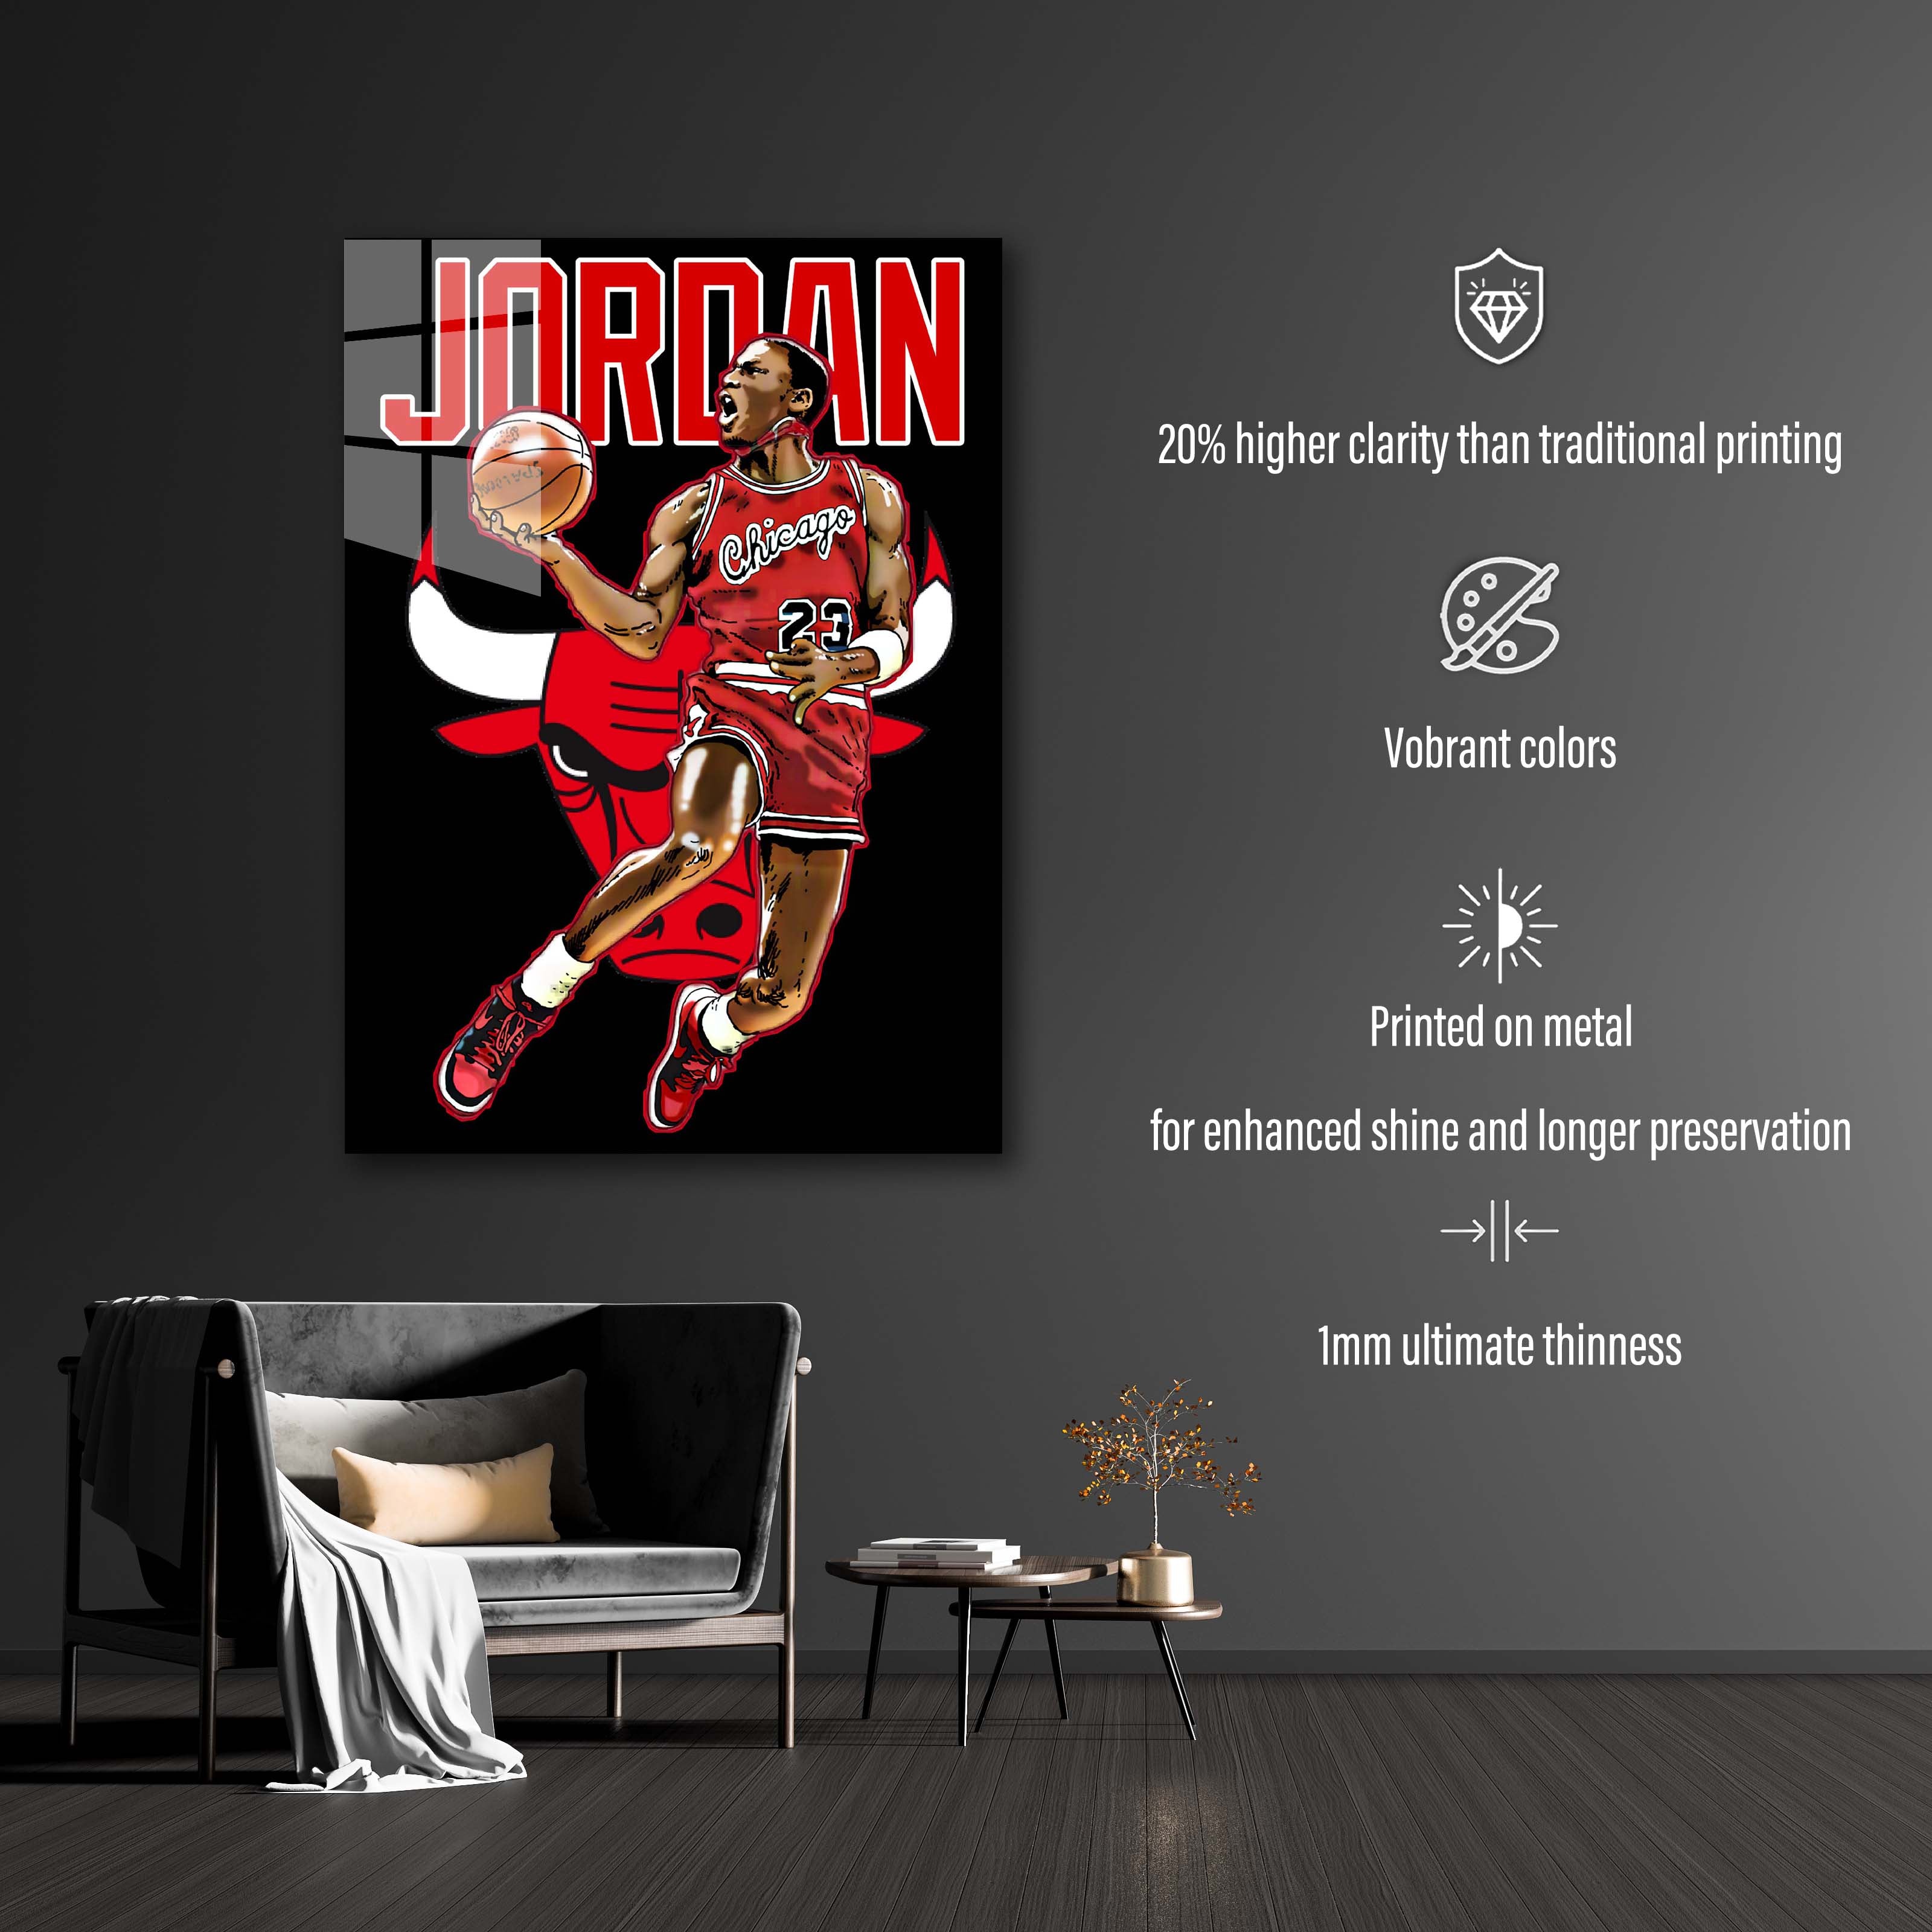 Jordan Chicago Bulls-designed by @My Kido Art